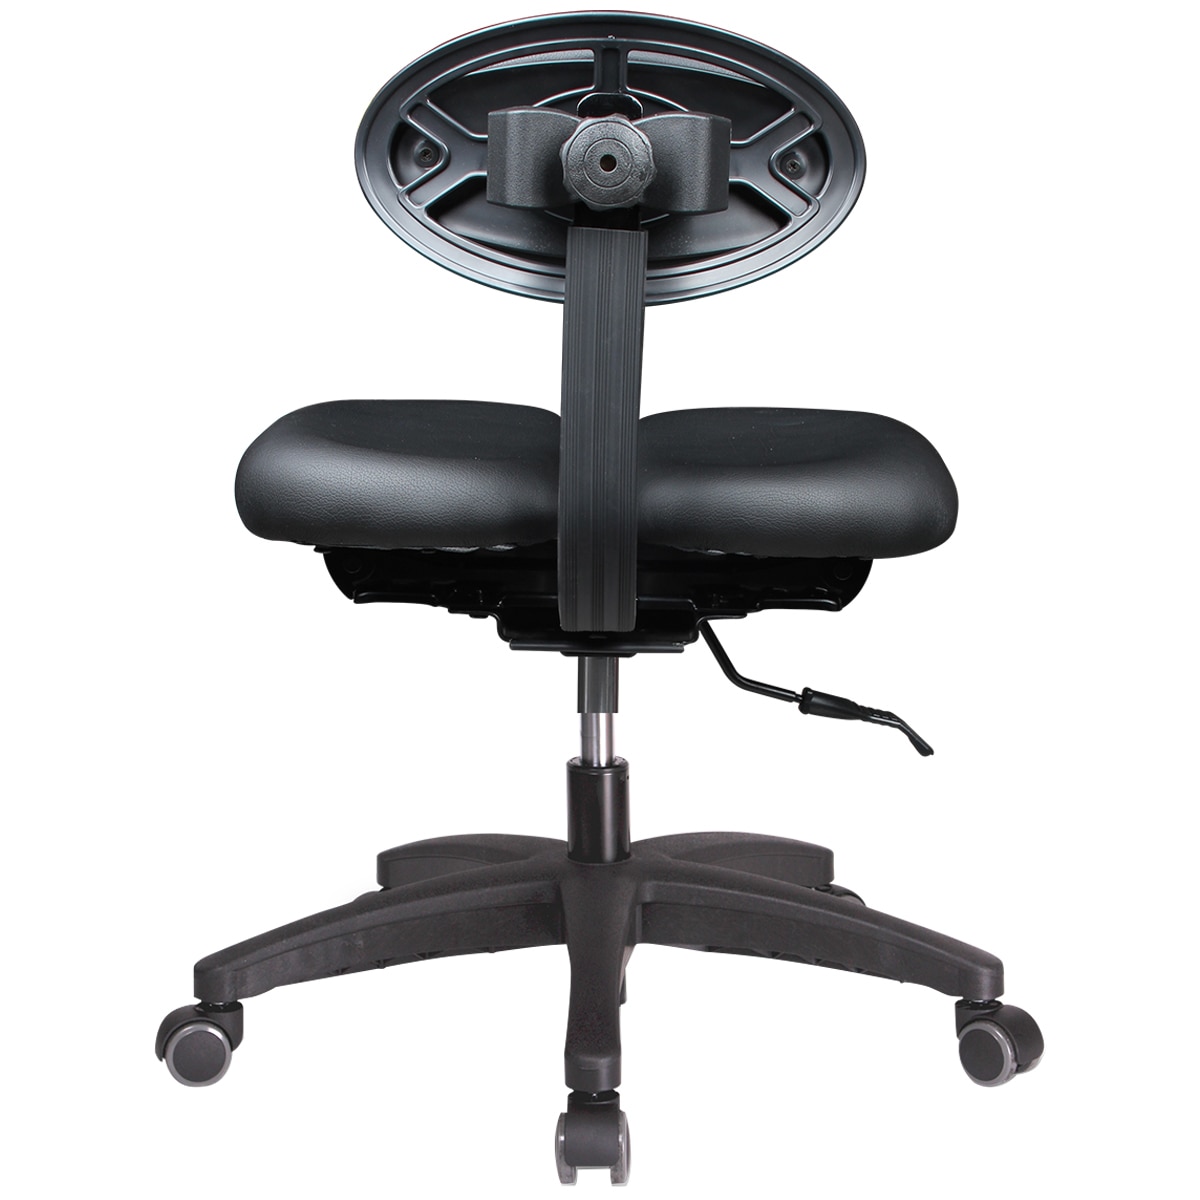 Hara Chair D Type Office Chair - Black